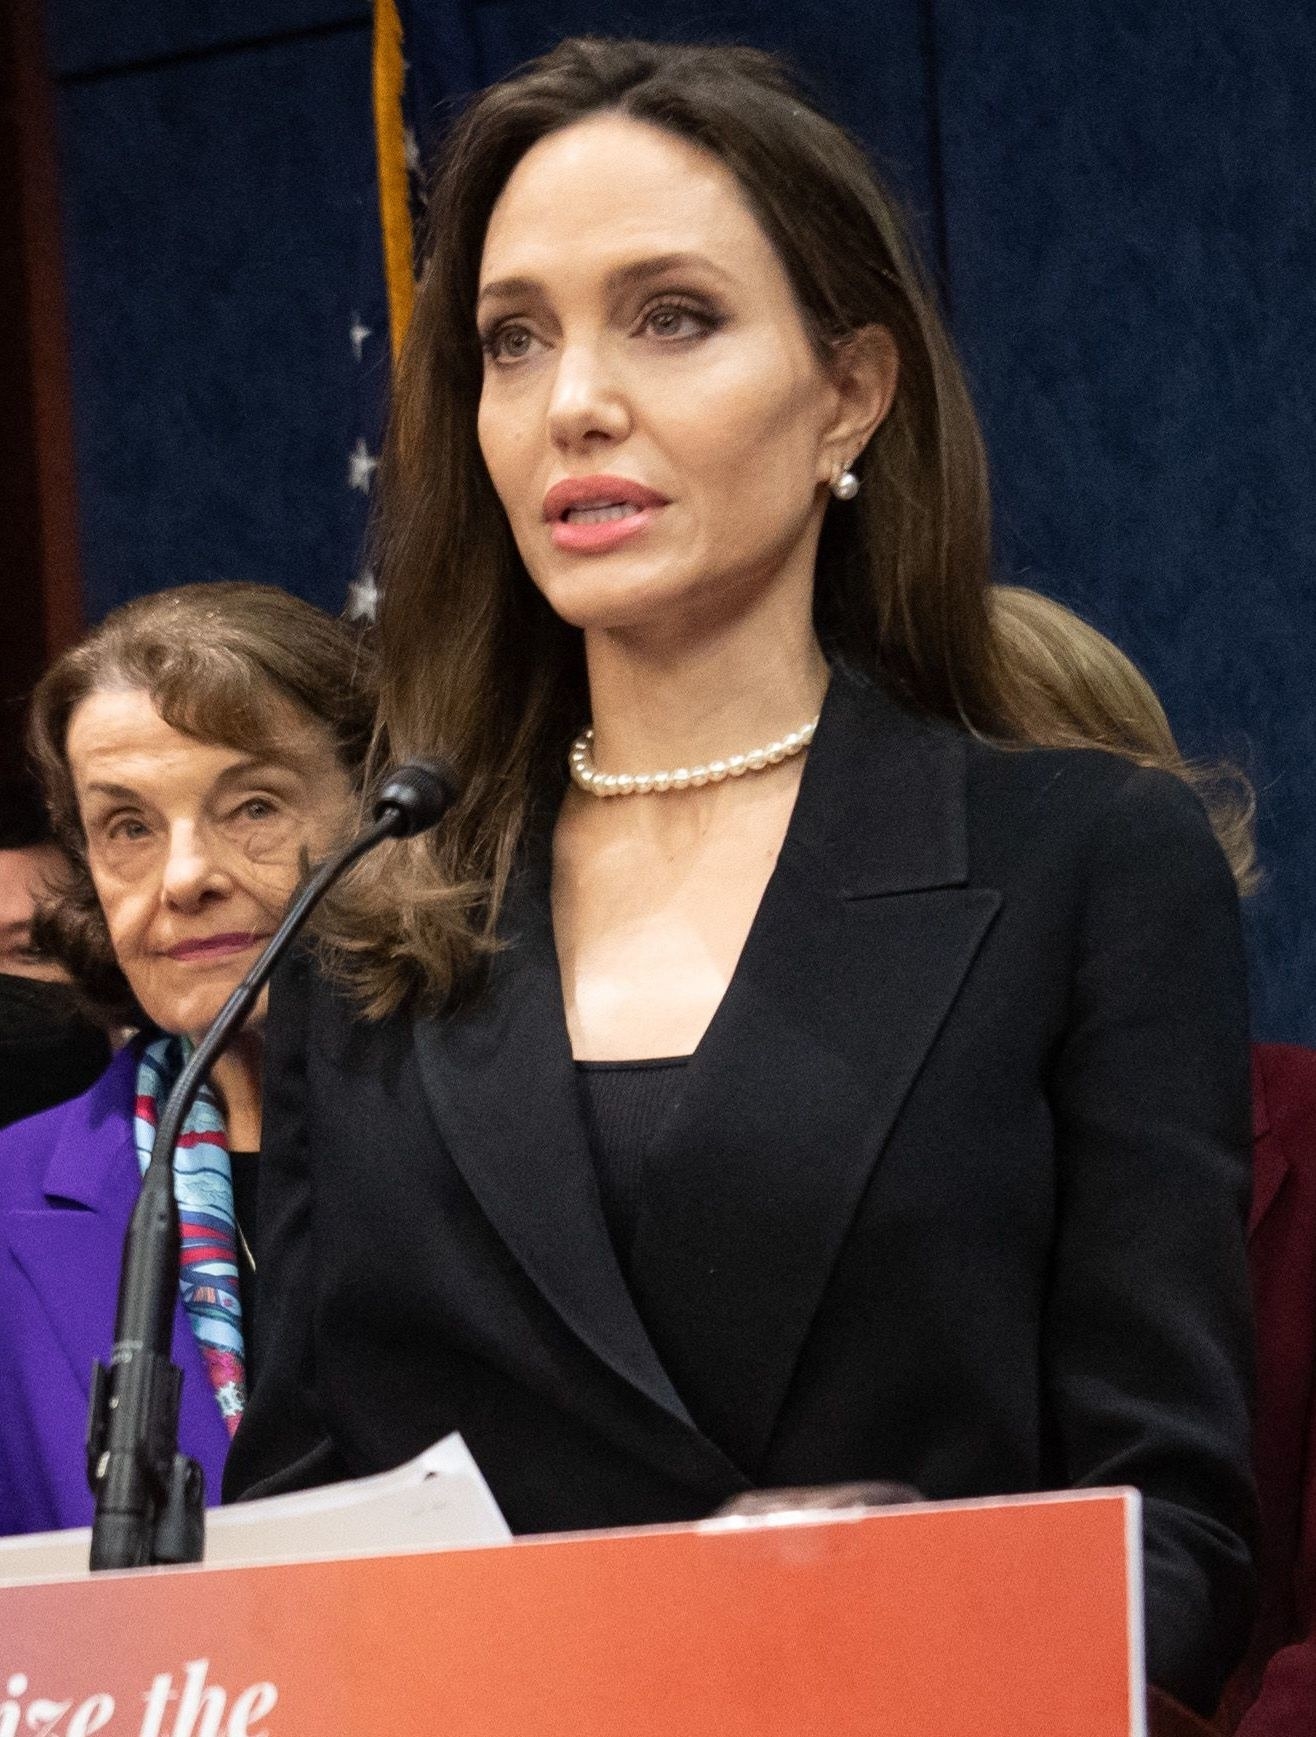 Angelina Jolie speaking at a podium